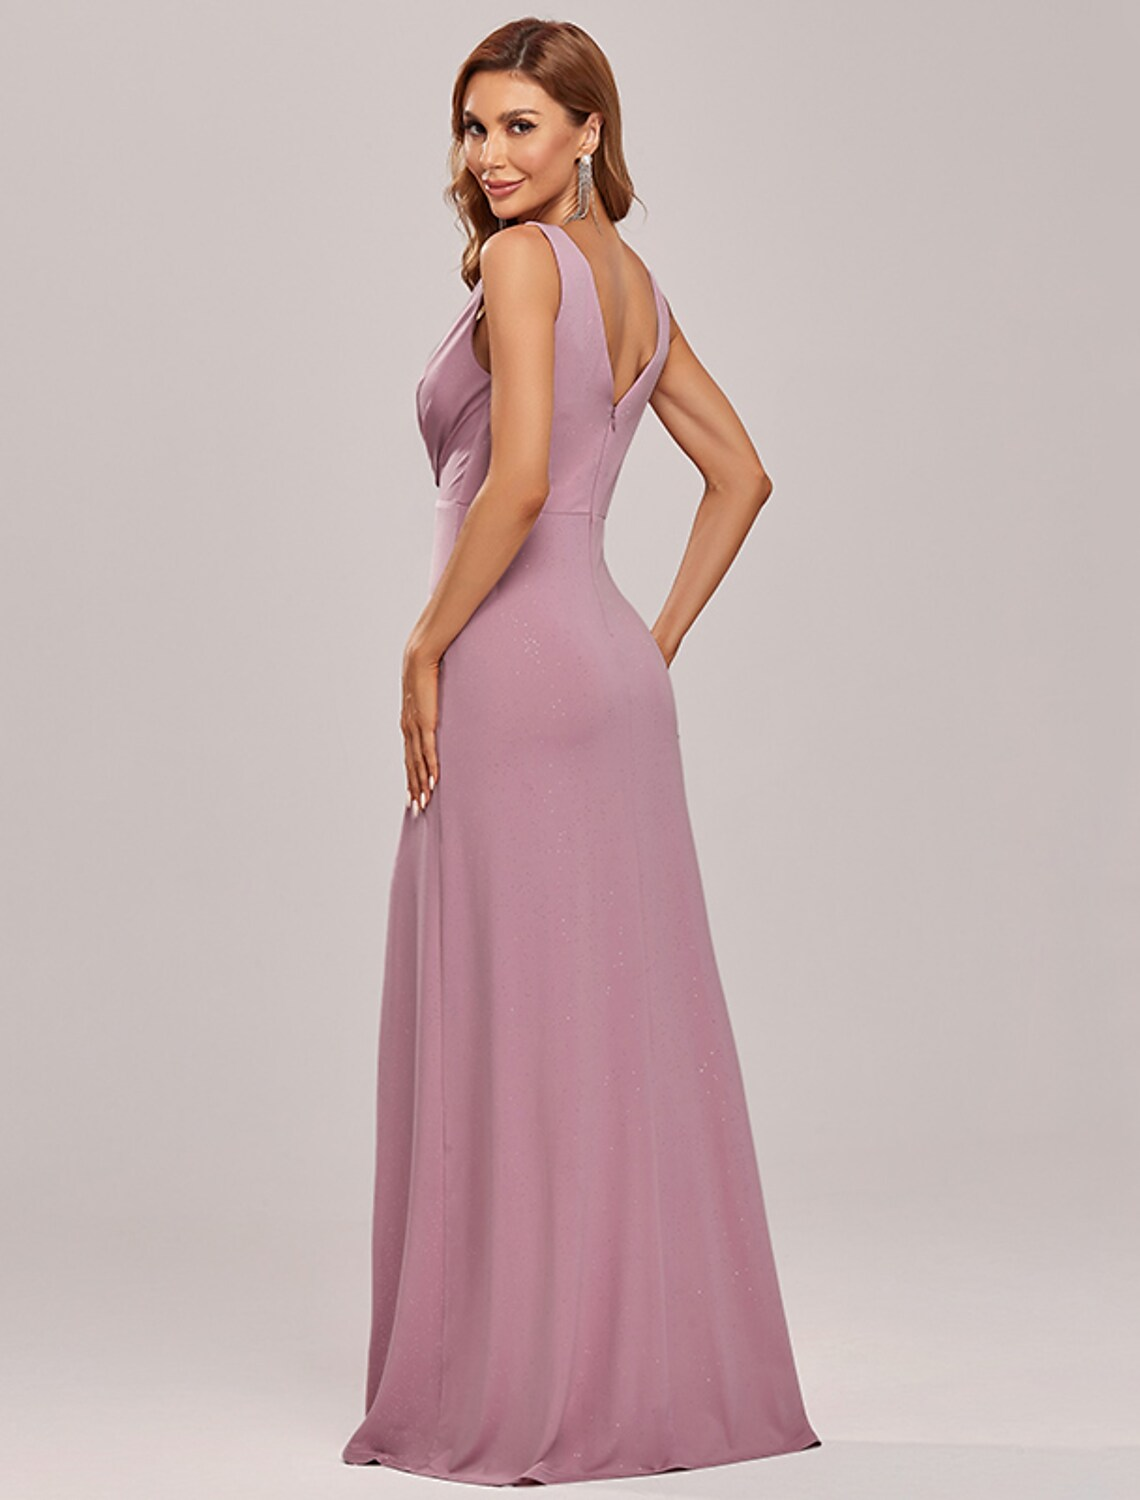 A-Line Elegant Formal Evening Dress V Neck Sleeveless Floor Length Cotton Blend with Draping